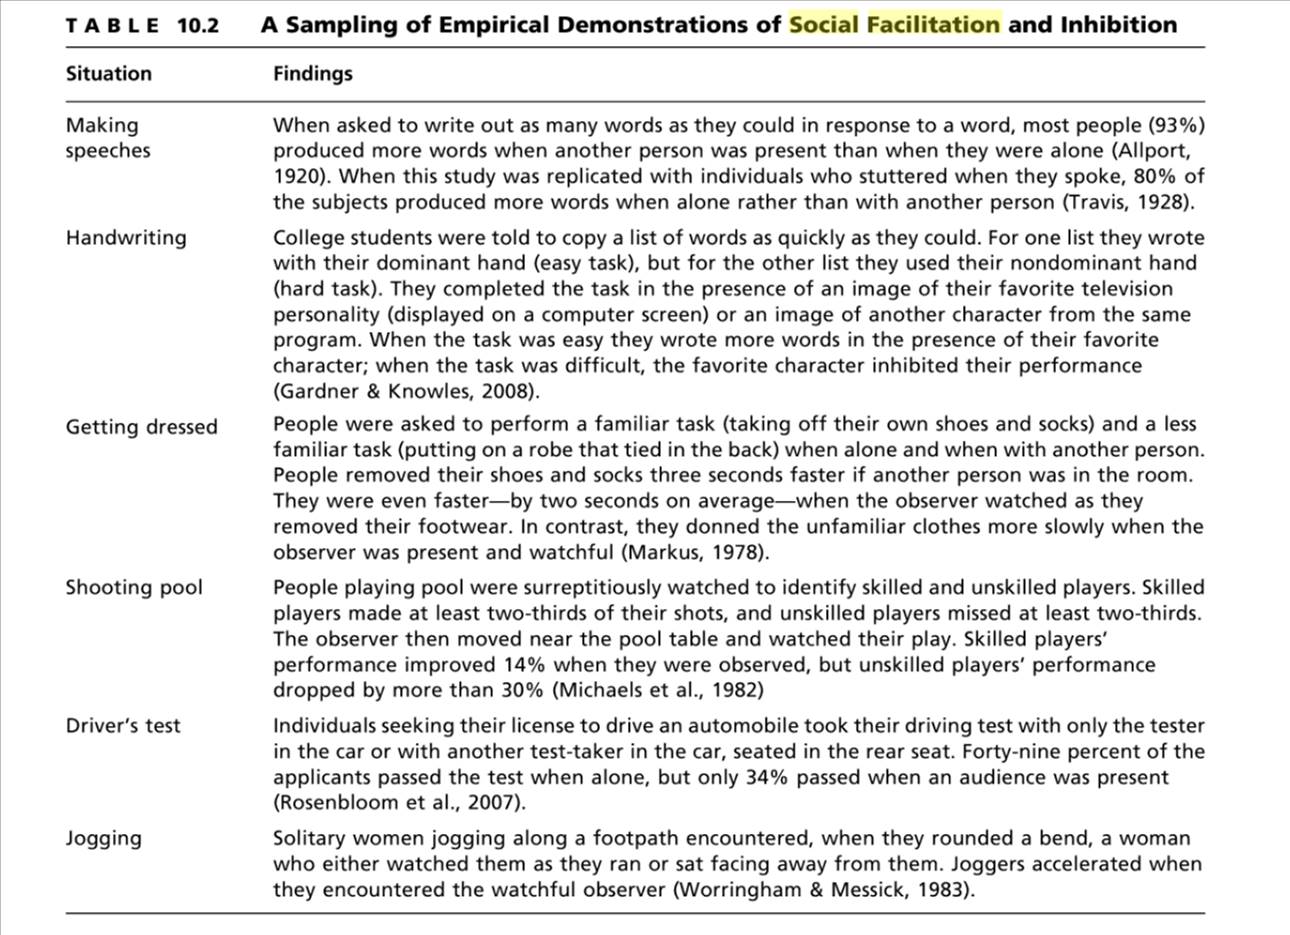 A Sampling of empirical demonstrations of Social Facilitation and Inhibition